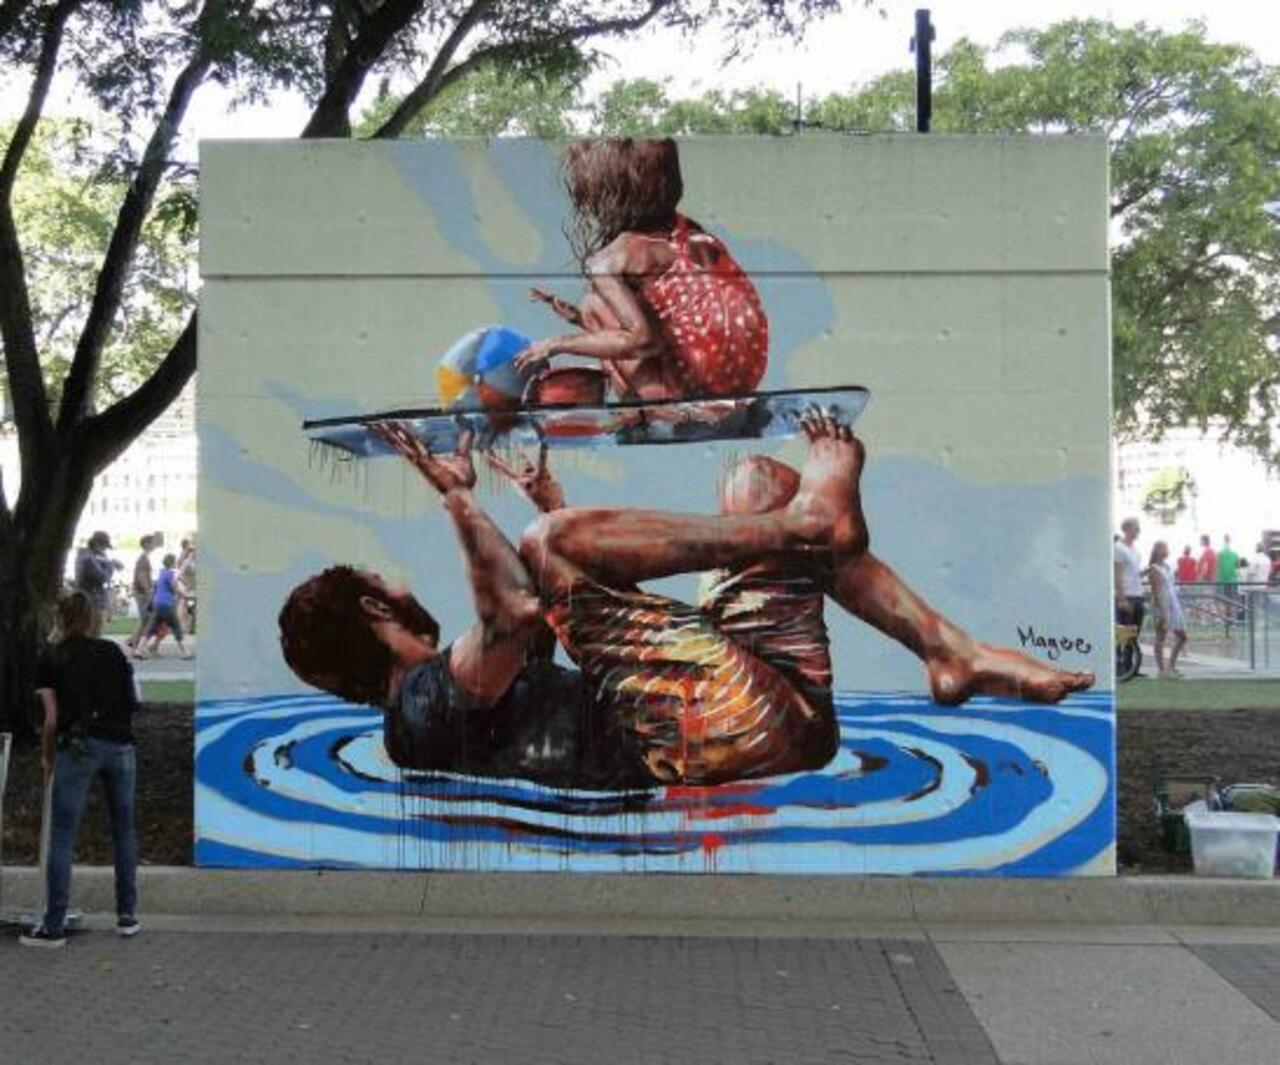 FINTAN MAGEE #AUSTRALIA 

#streetart #paint #art #photo #urban #banksy #graffiti #world #painting http://t.co/Yqh2OflGLD